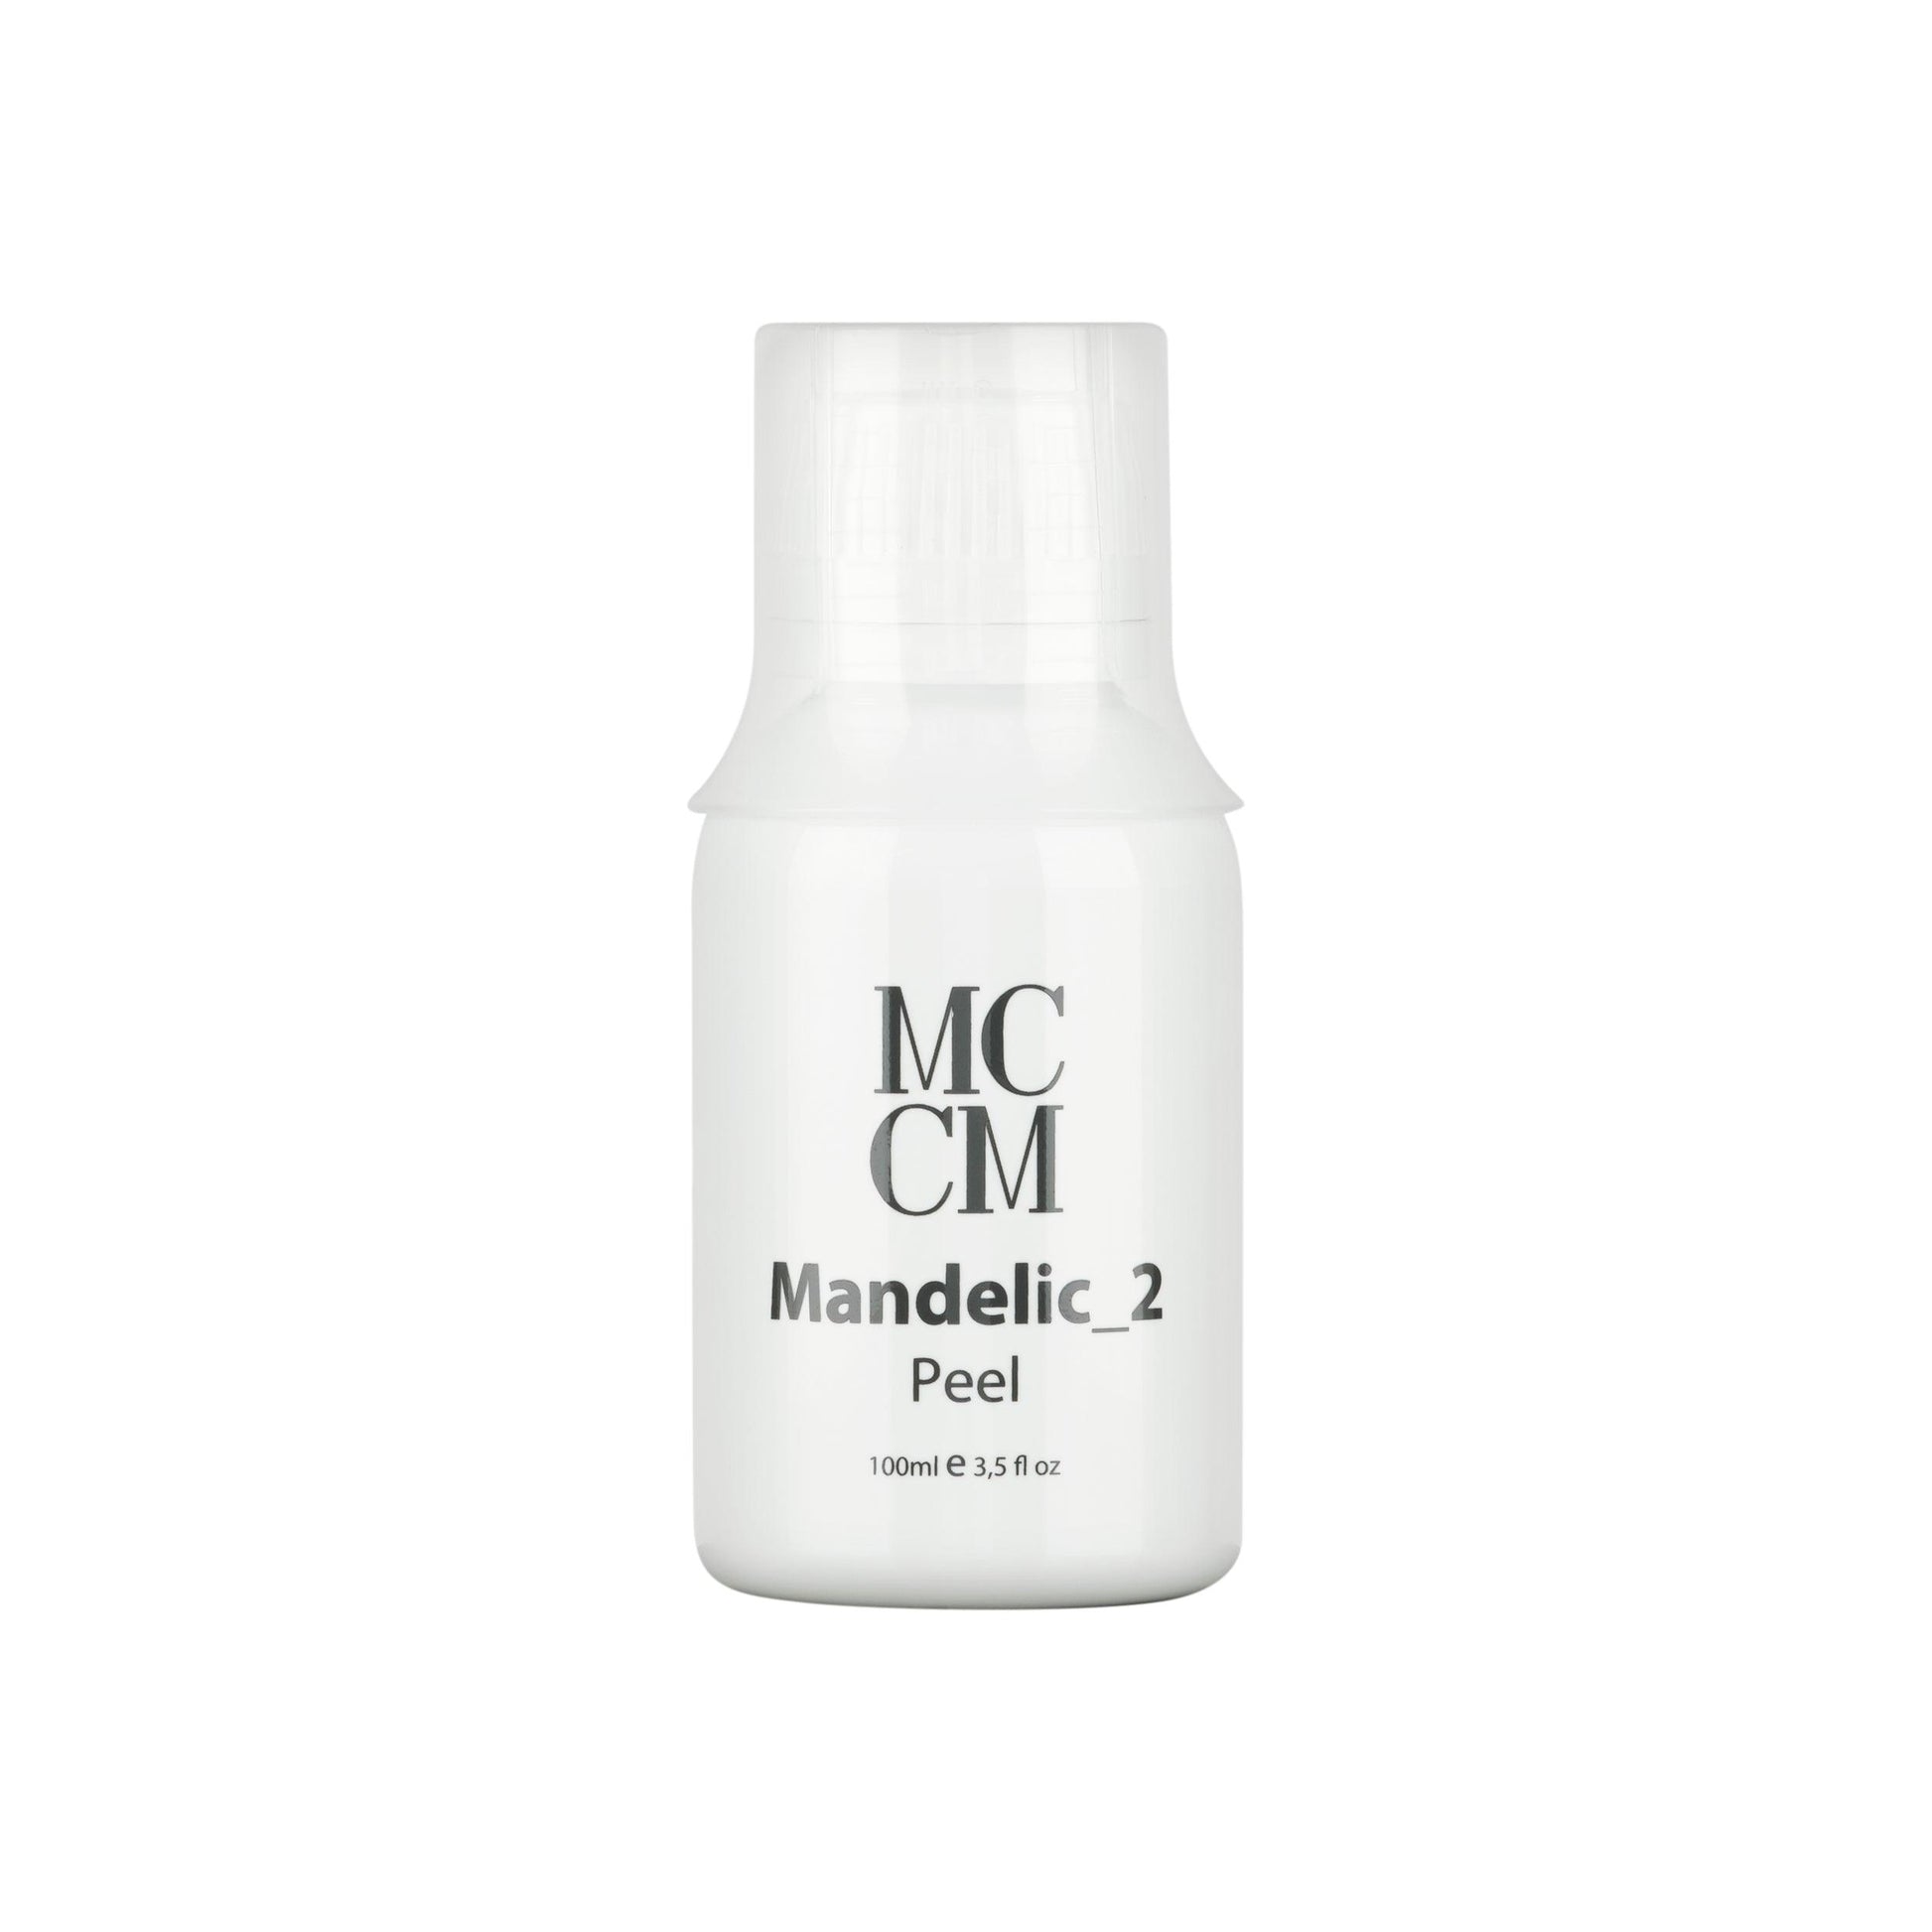 Mandelic_2 Peel - MCCM Medical Cosmetics